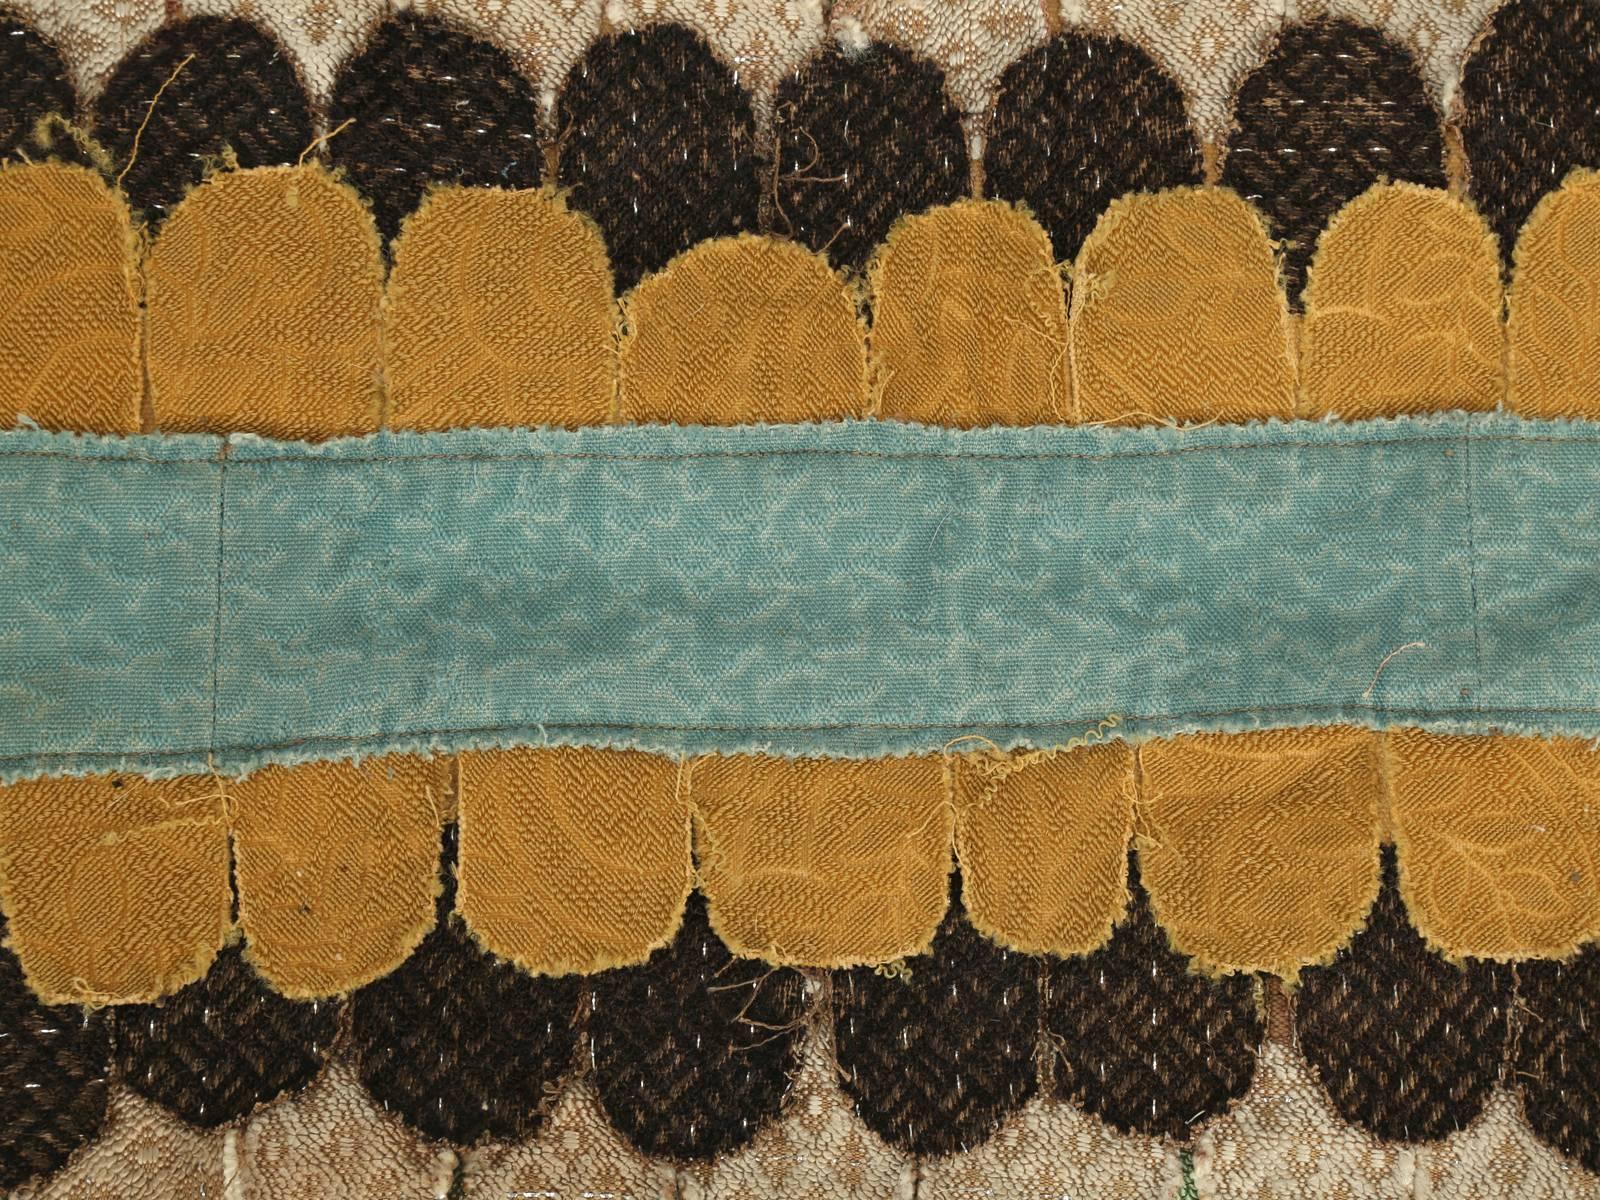 Mid-20th Century American Folk Art Rug from Fabric Scraps